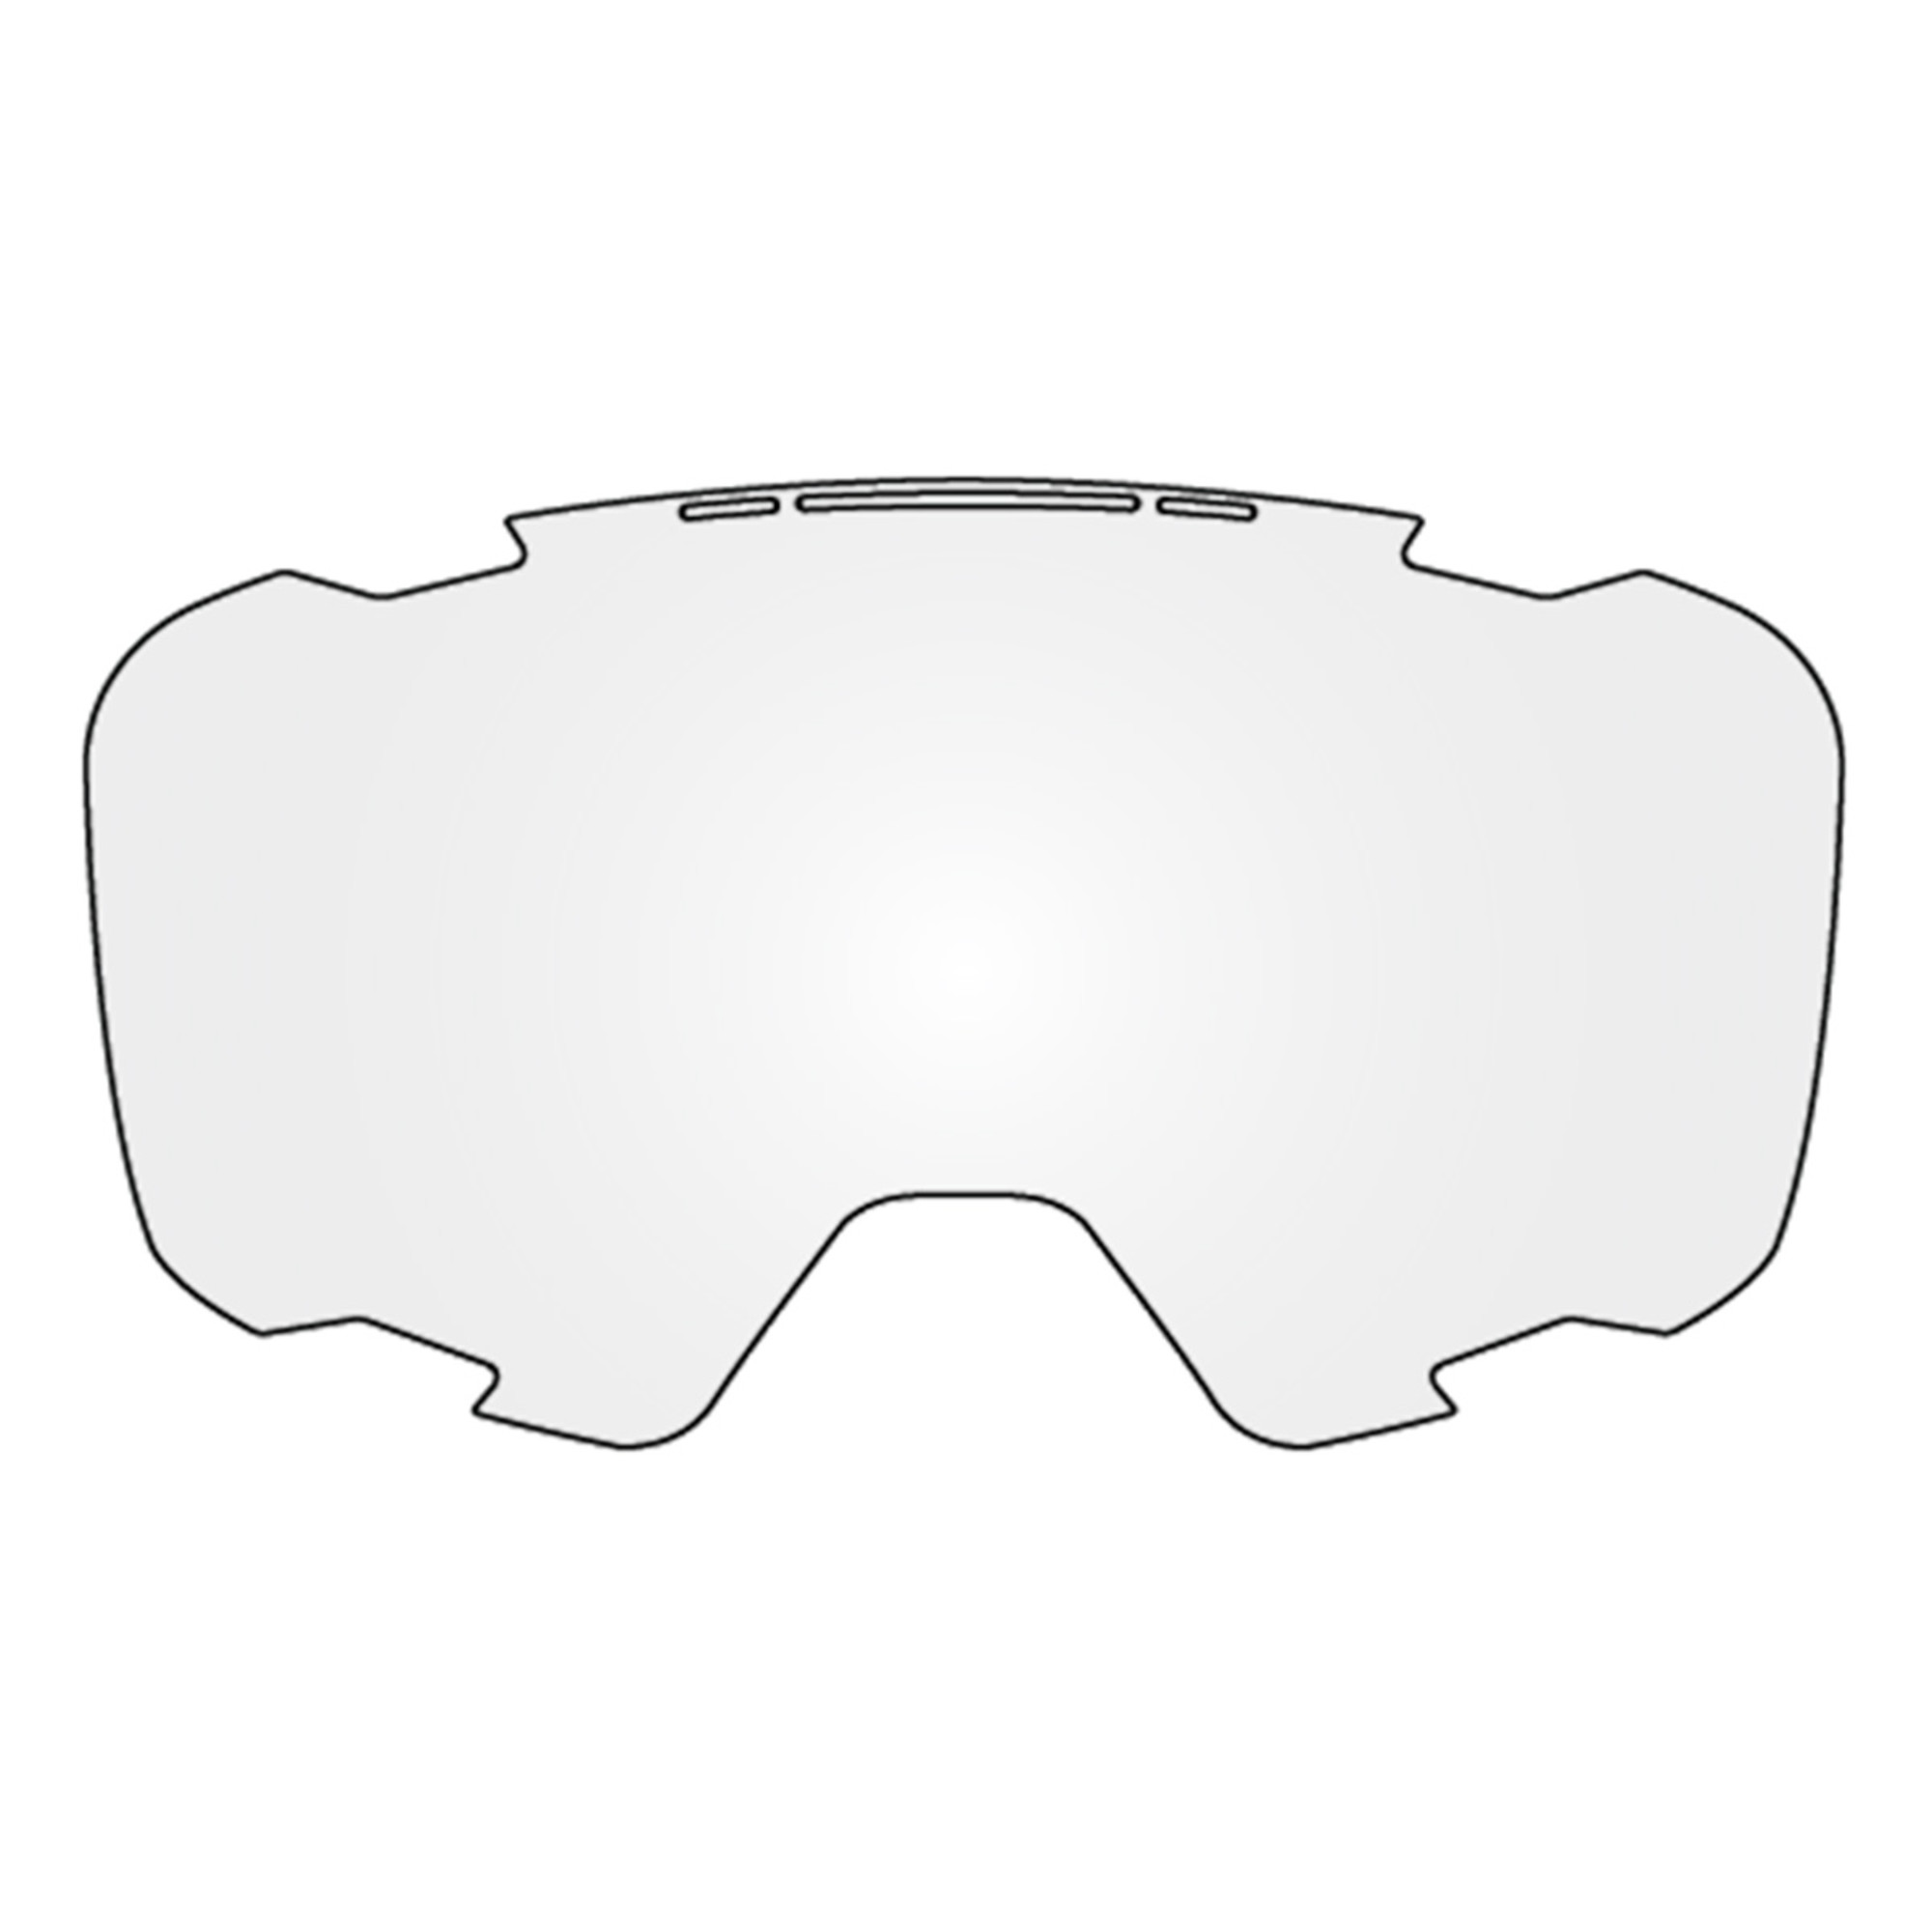 509 lens goggles adult aviator 20 fuzion flow